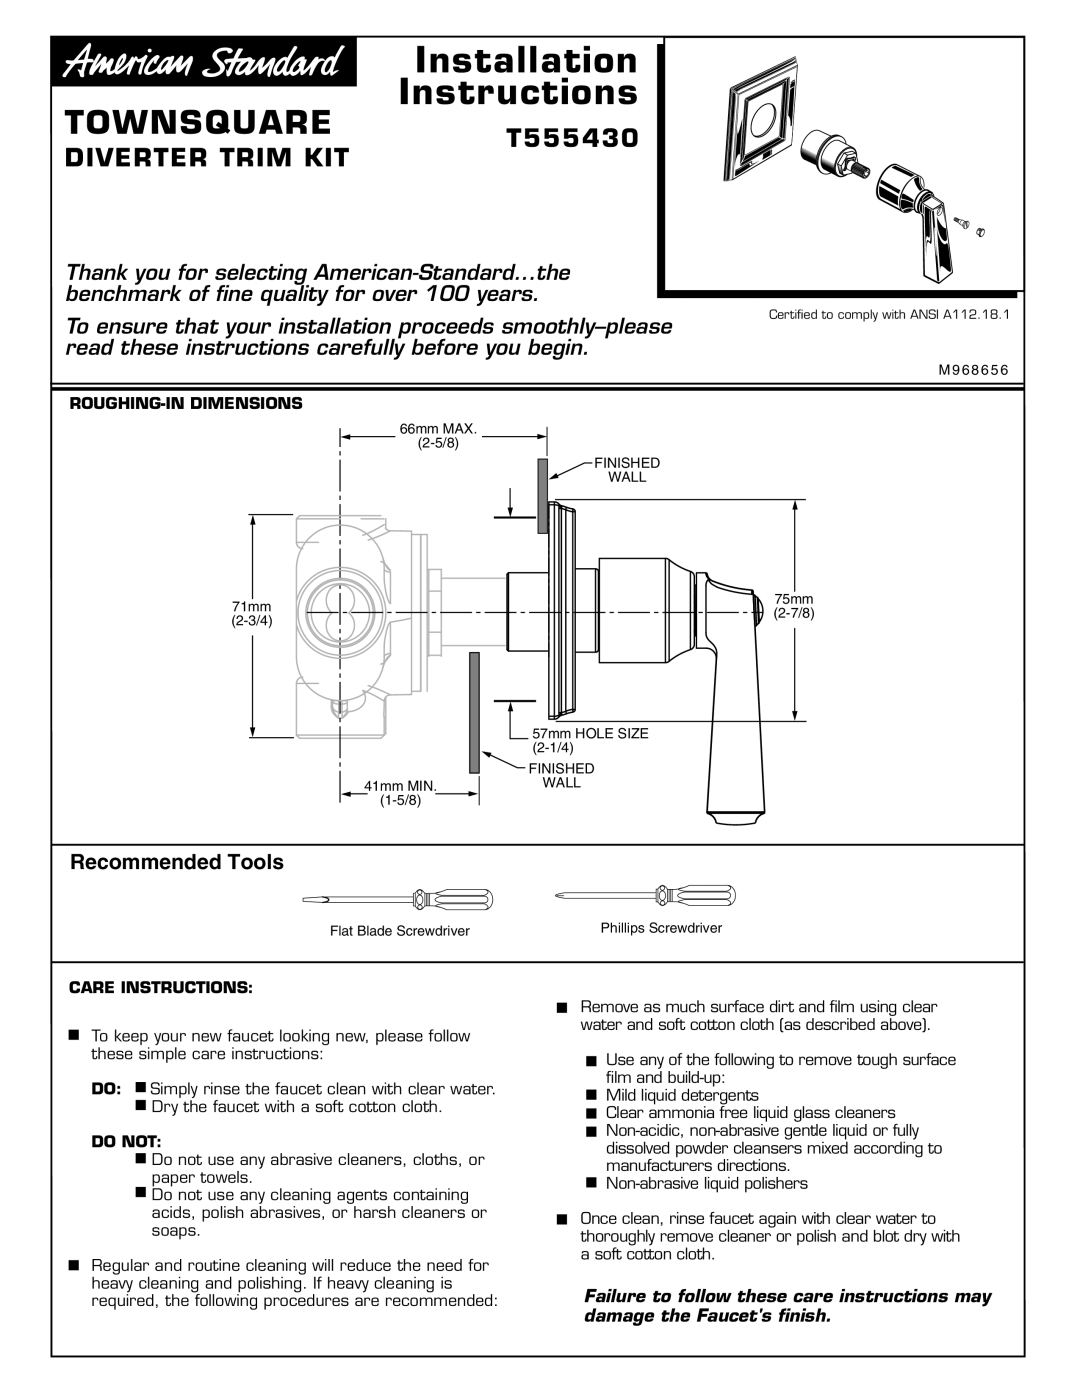 American Standard M968656 installation instructions TOWNSQUARE T555430, Diverter Trim Kit, Installation Instructions 